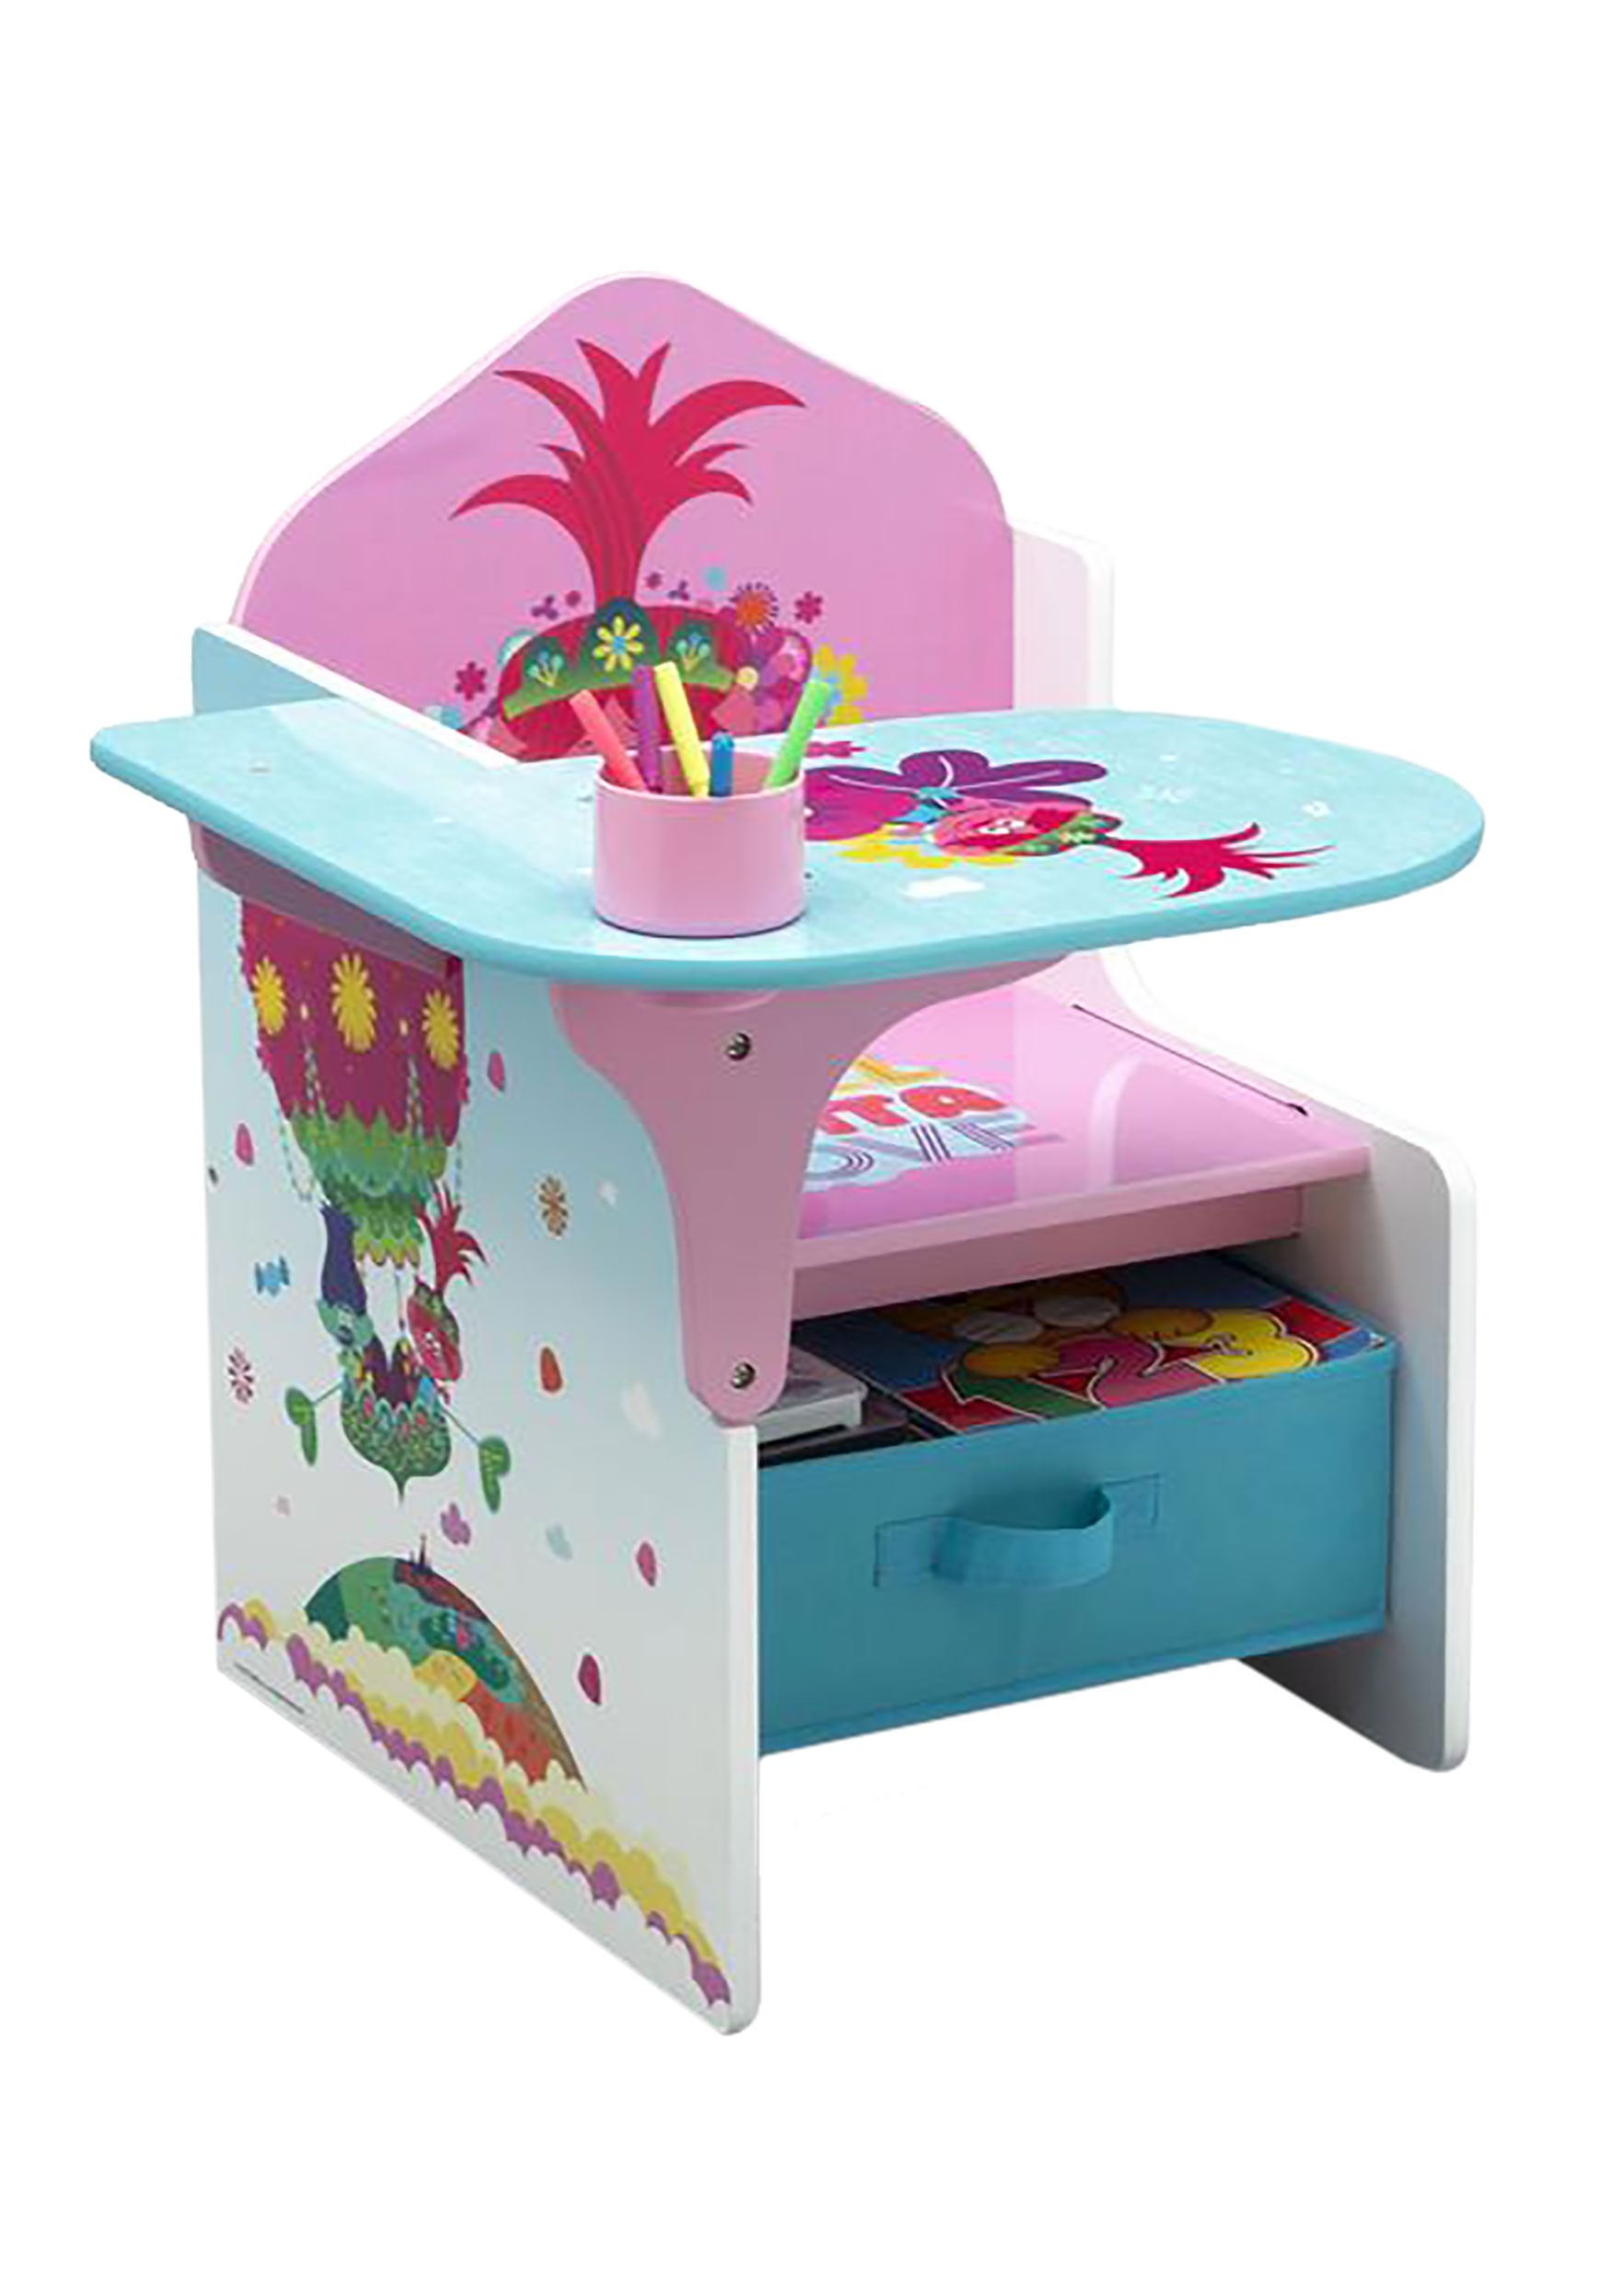 Trolls Poppy Chair Desk w/ Storage Bin